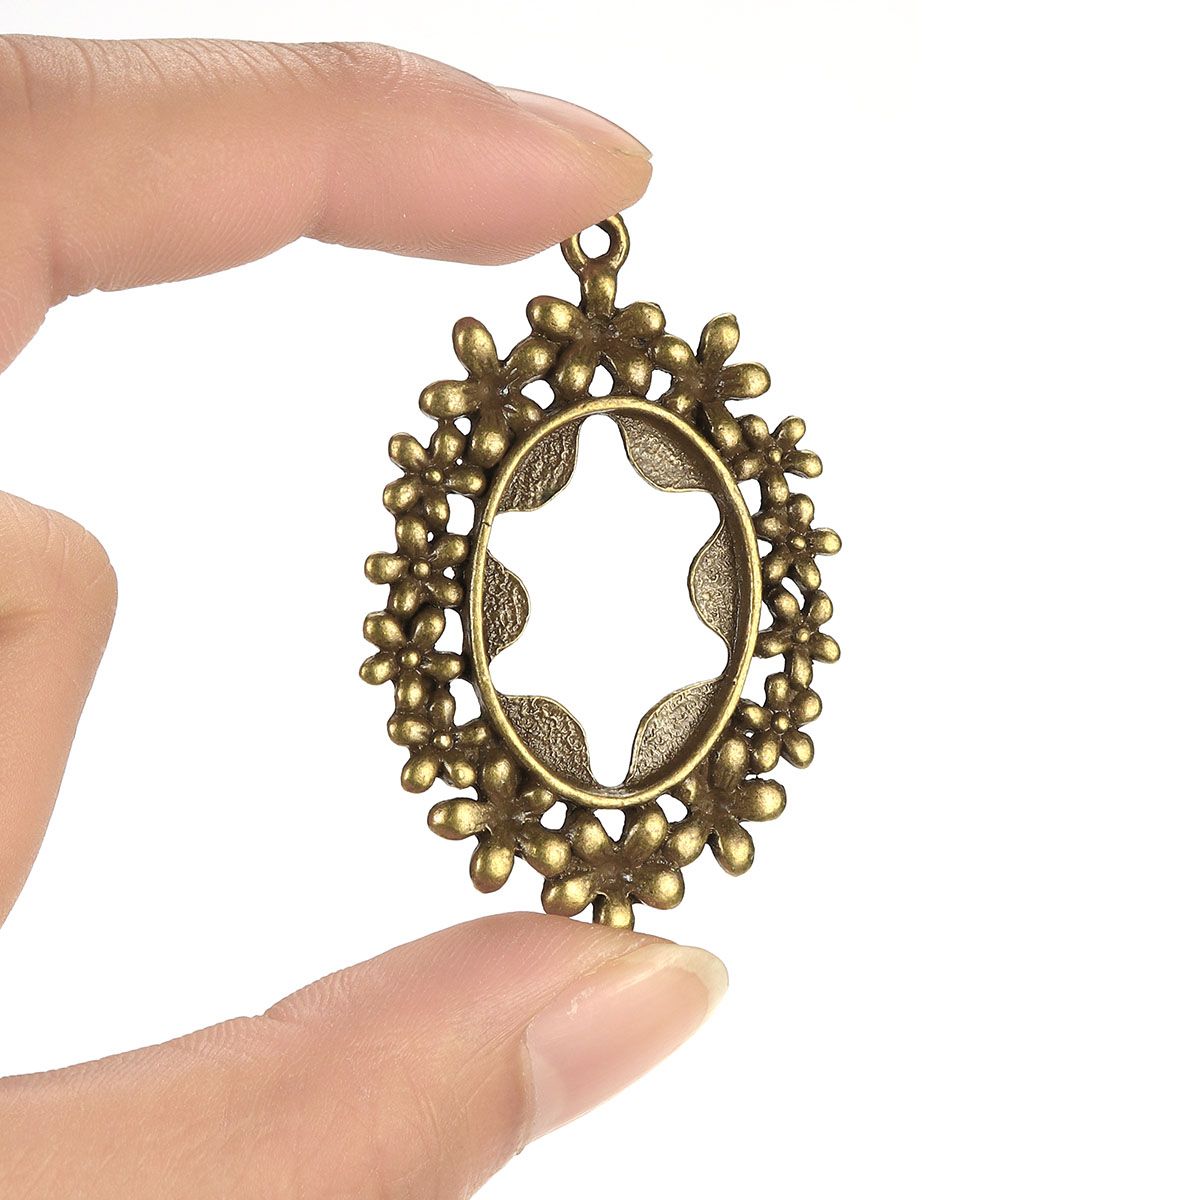 50gPack-Vintage-Pendant-DIY-Jewellery-Making-For-Necklace-Keychain-Handcraft-1708825